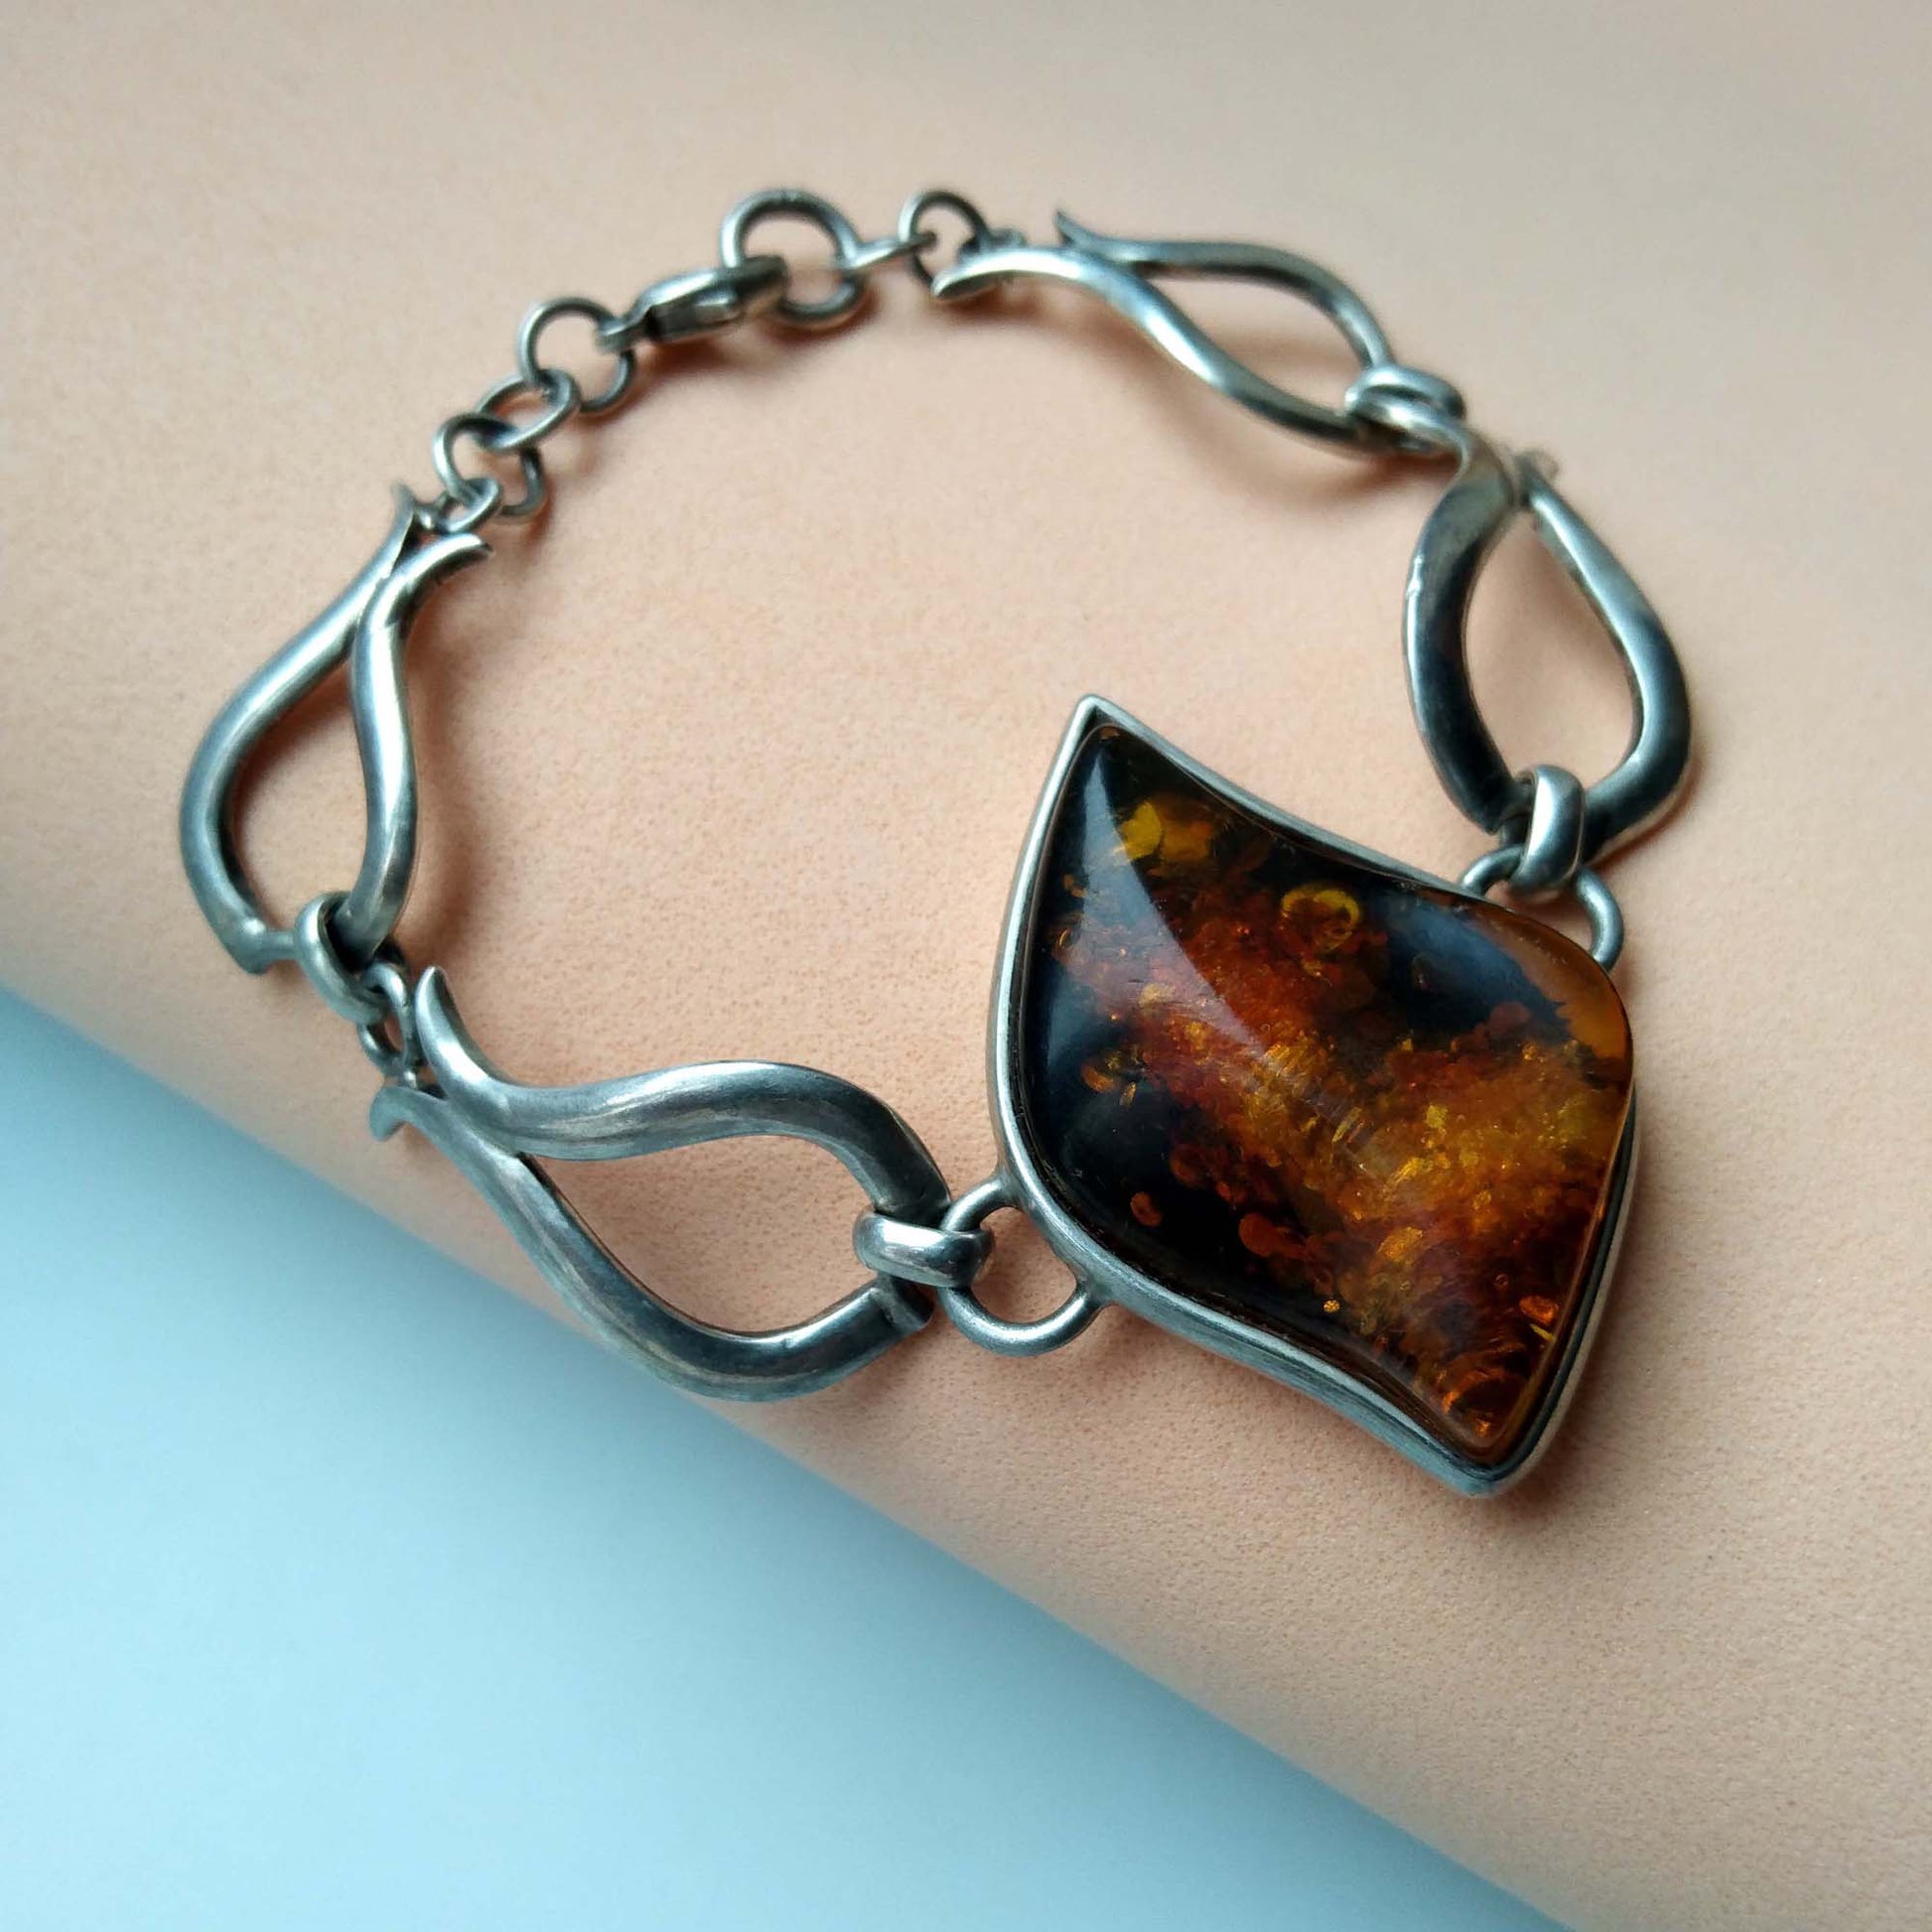 Massive bracelet with large amber